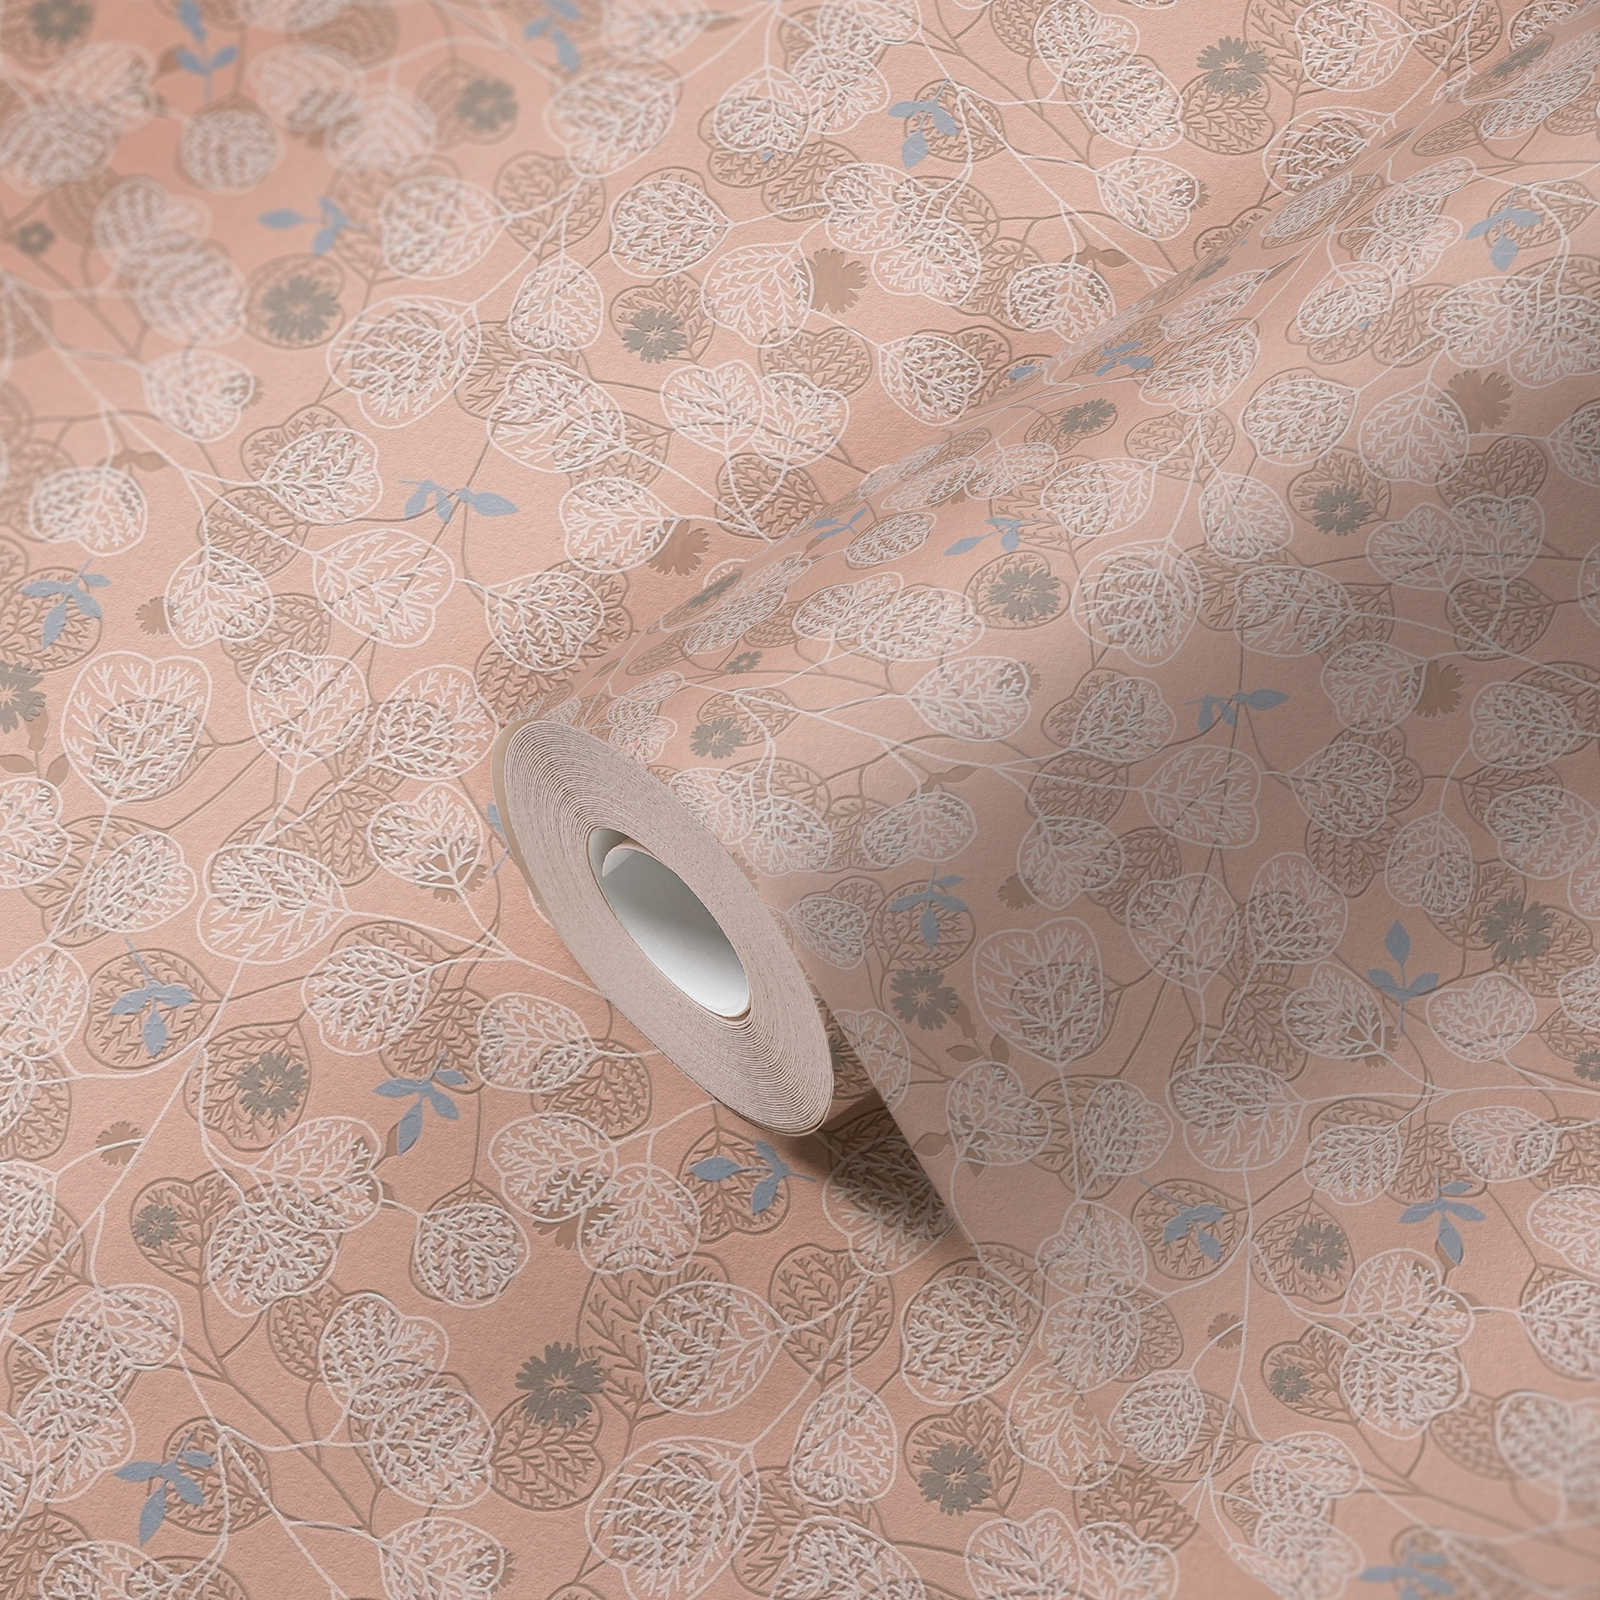             Carta da parati in tessuto non tessuto con motivi floreali vintage - rosa, bianco, blu
        